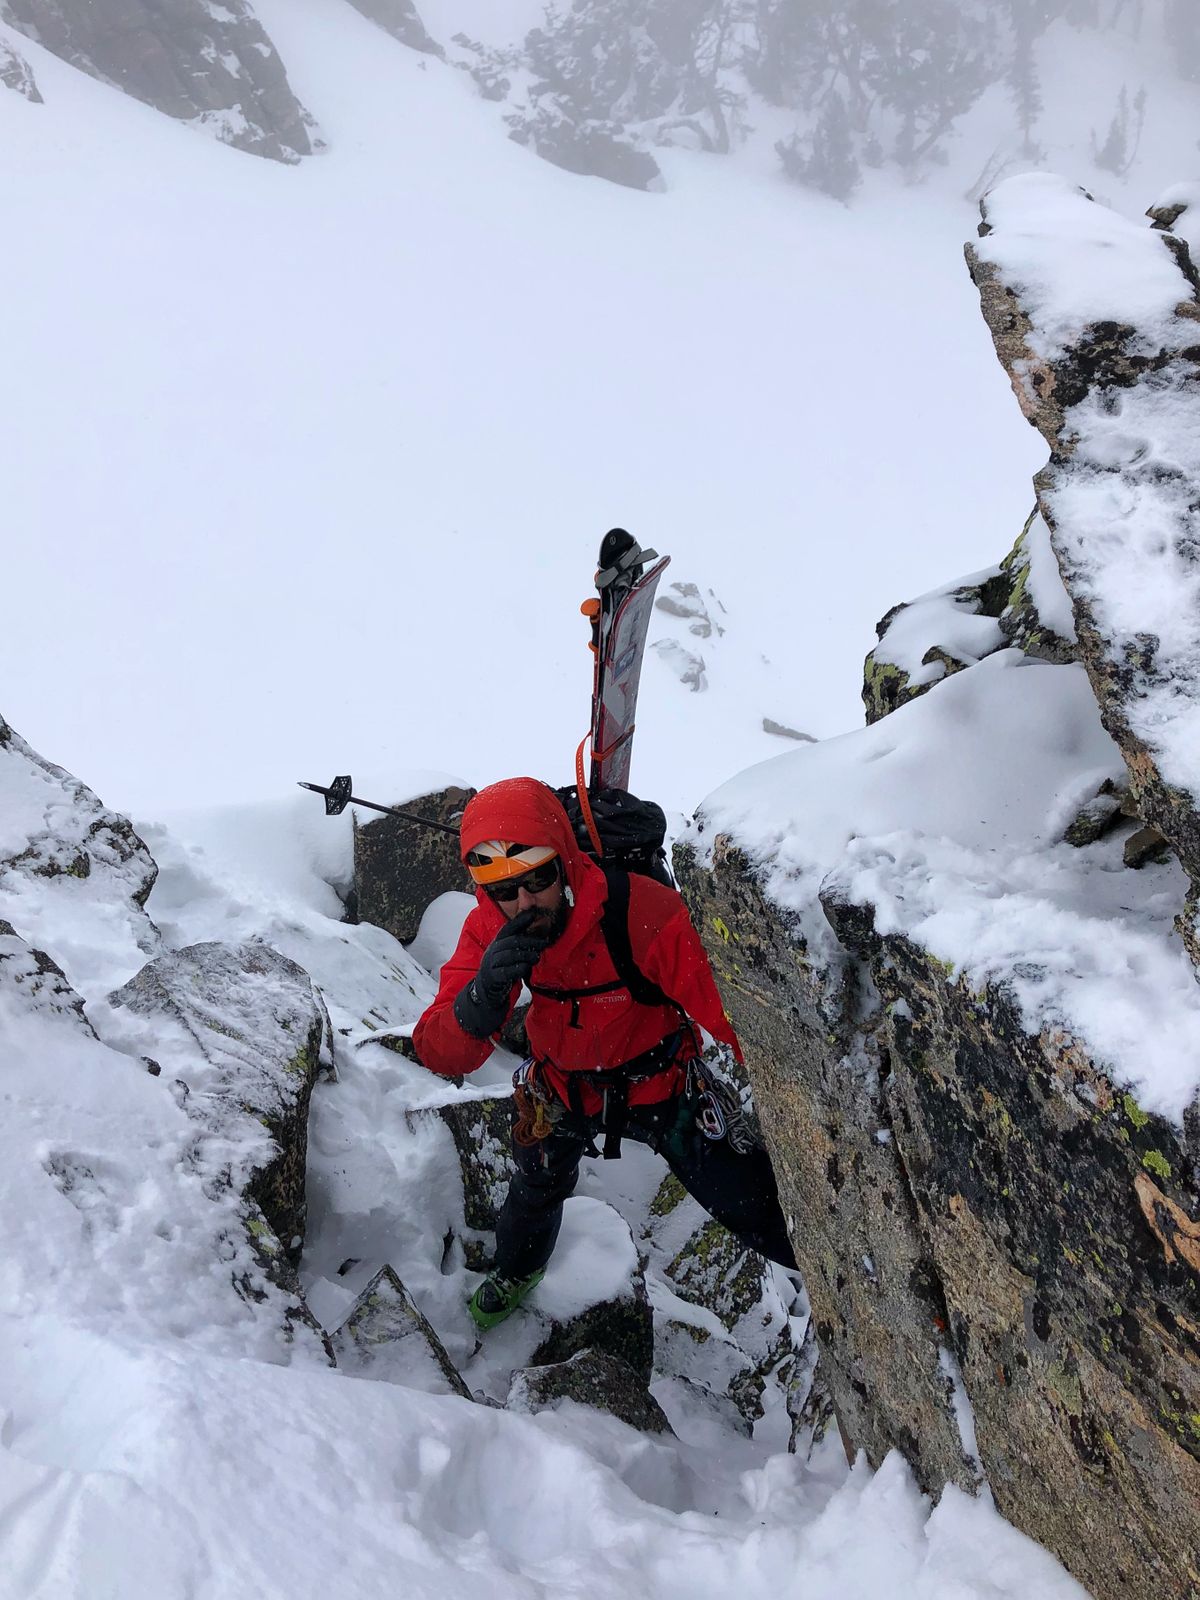 A little climbing during ski season